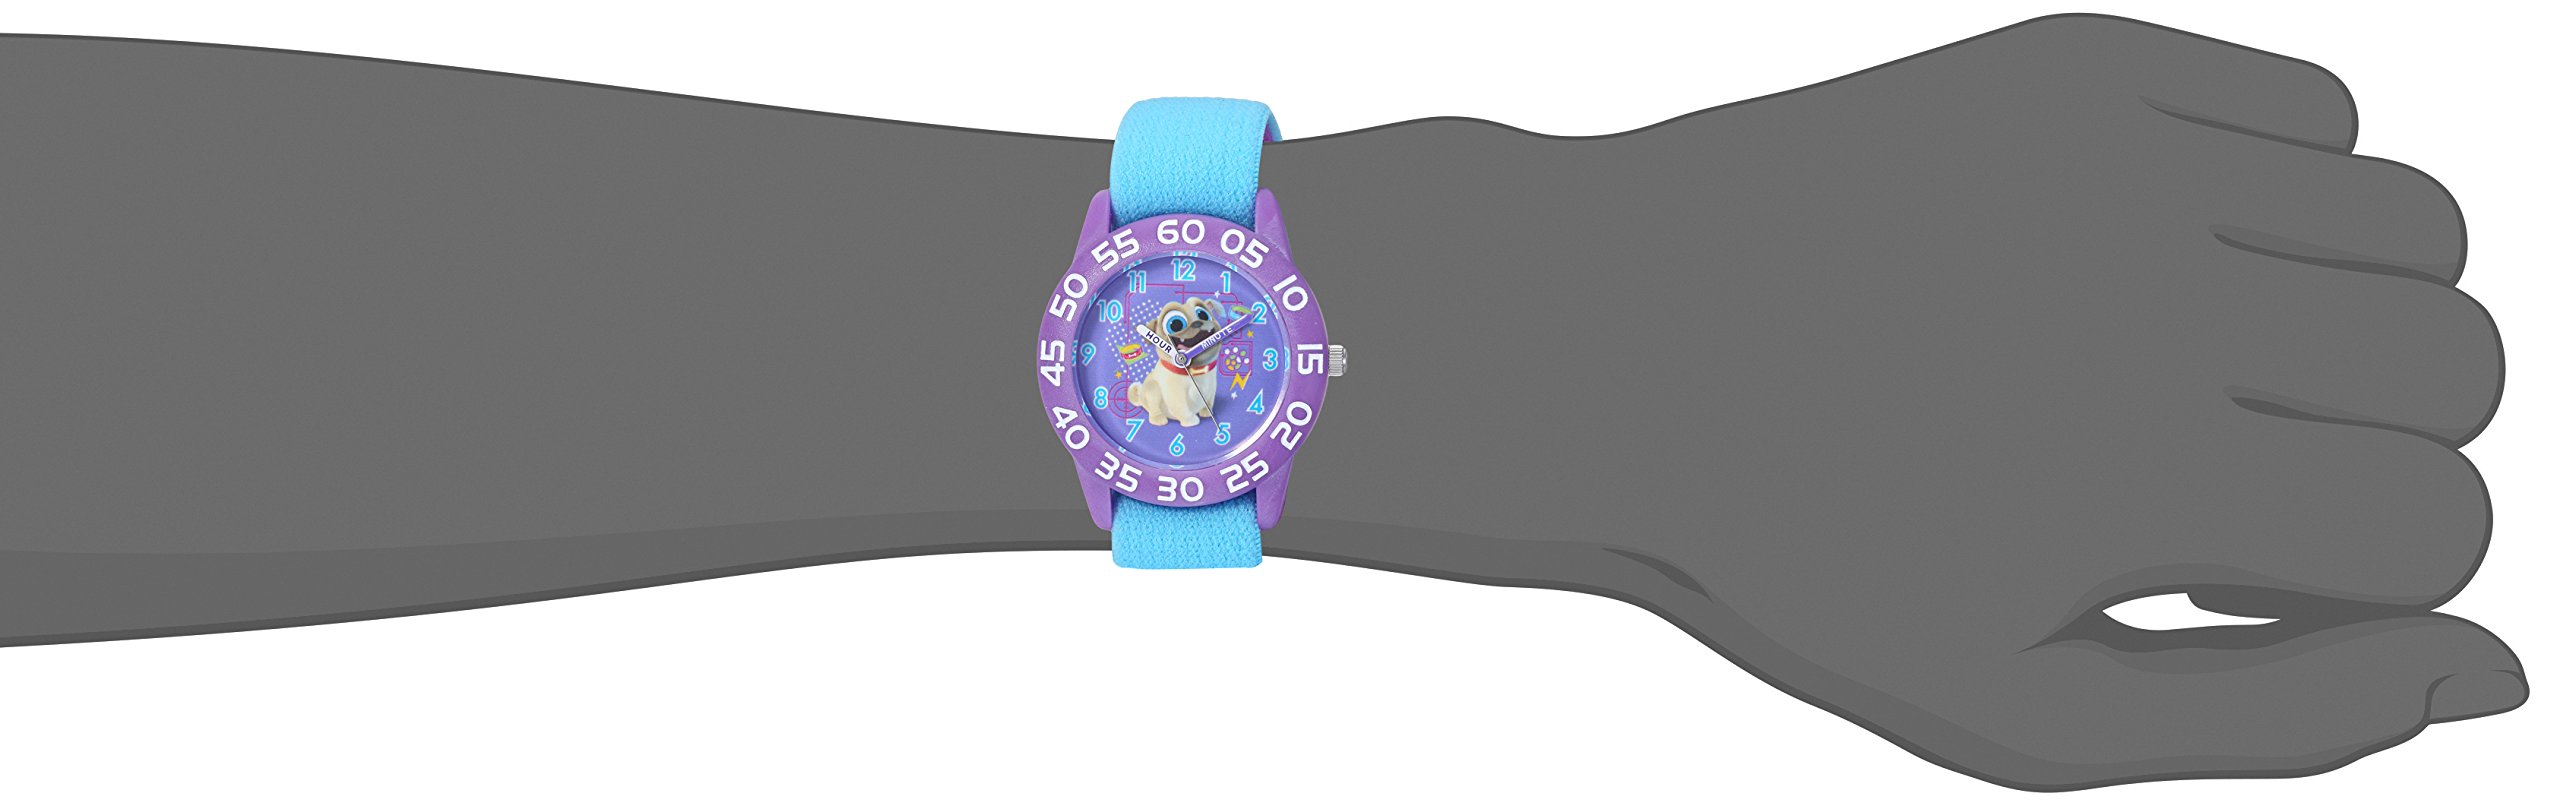 Disney Kids' Plastic Time Teacher Analog Quartz Nylon Strap Watch